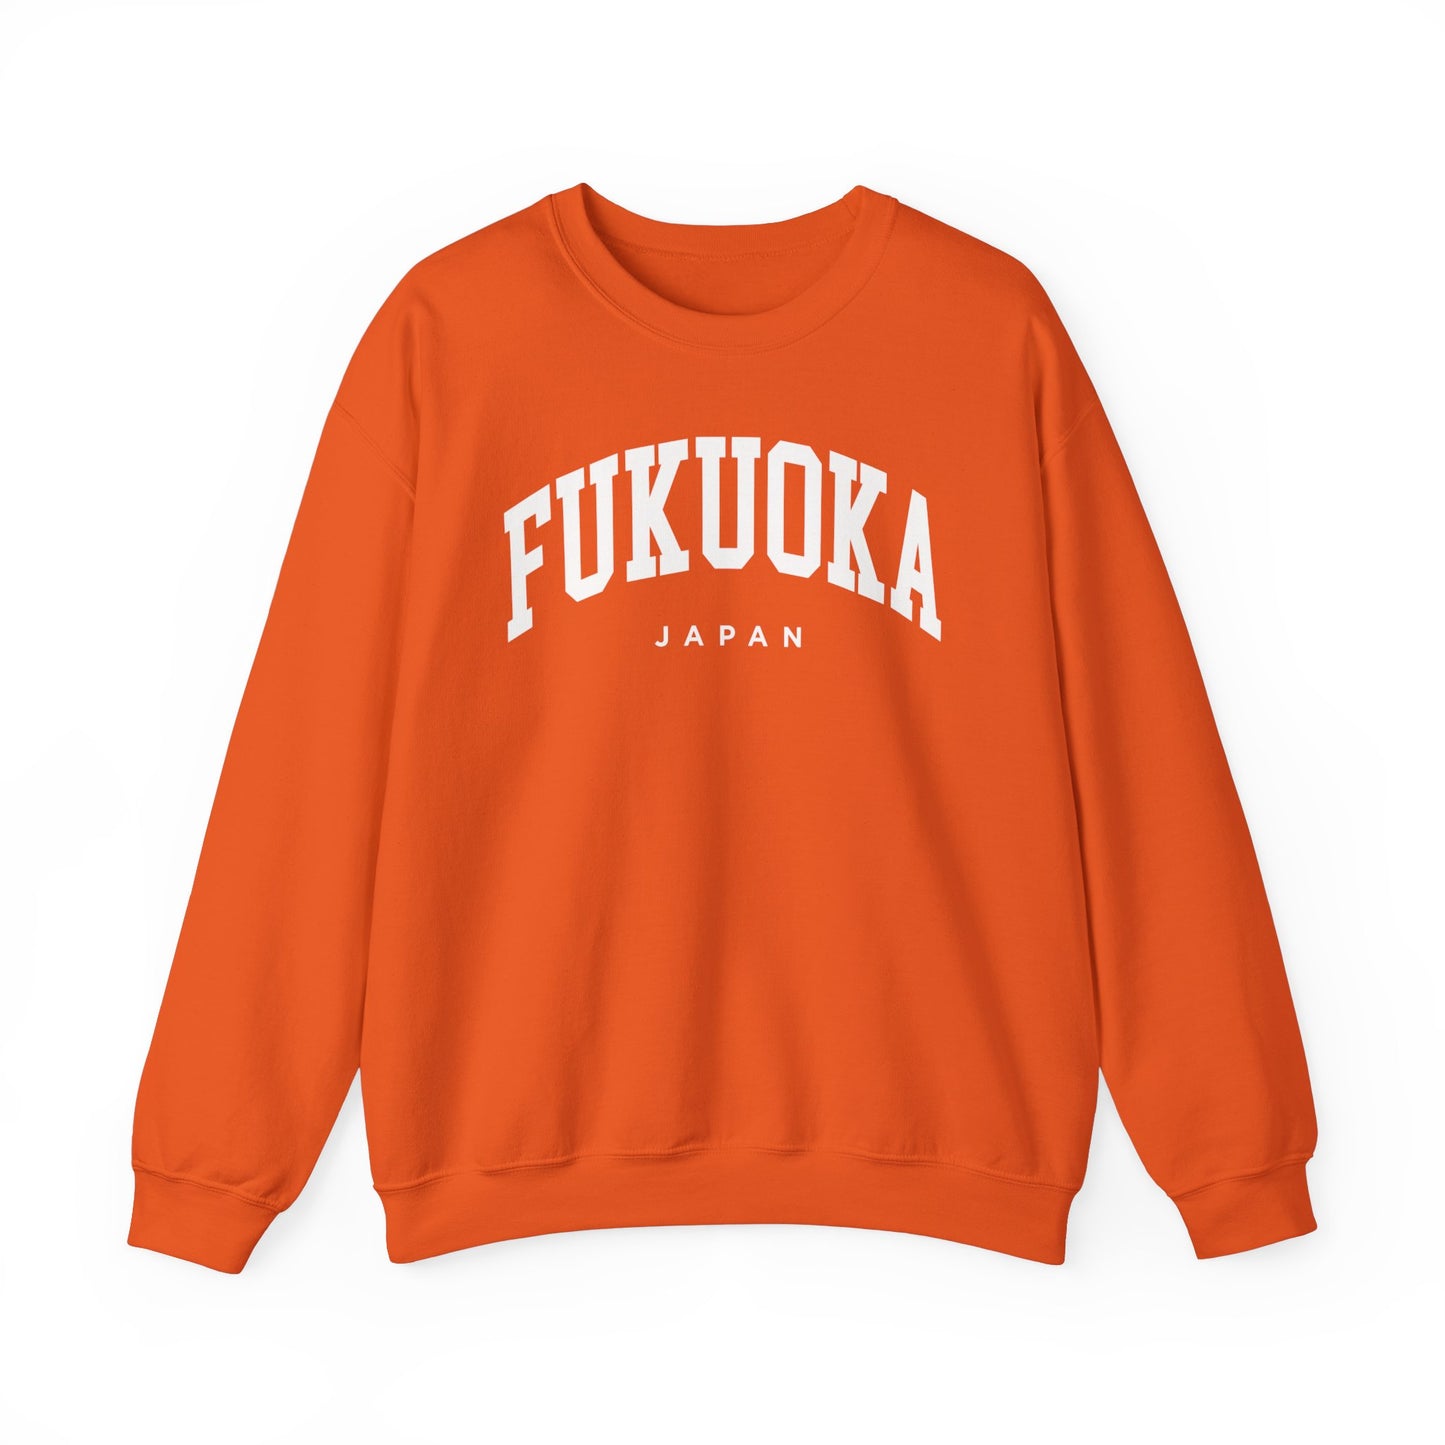 Fukuoka Japan Sweatshirt